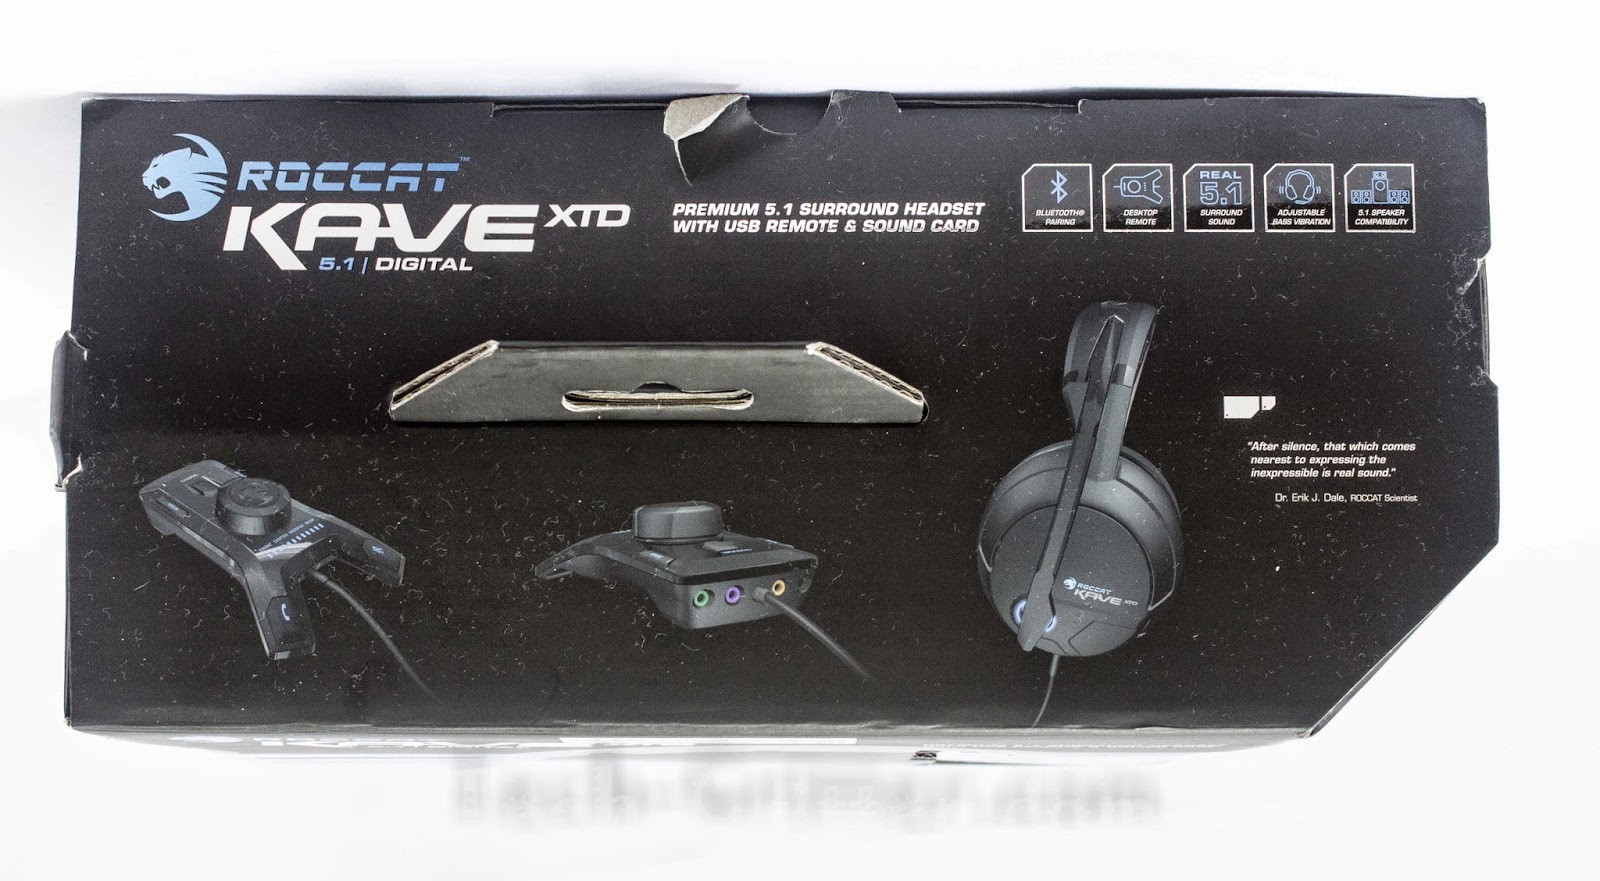 Unboxing & Review: Roccat Kave XTD 5.1 Digital Surround Sound Headset 114